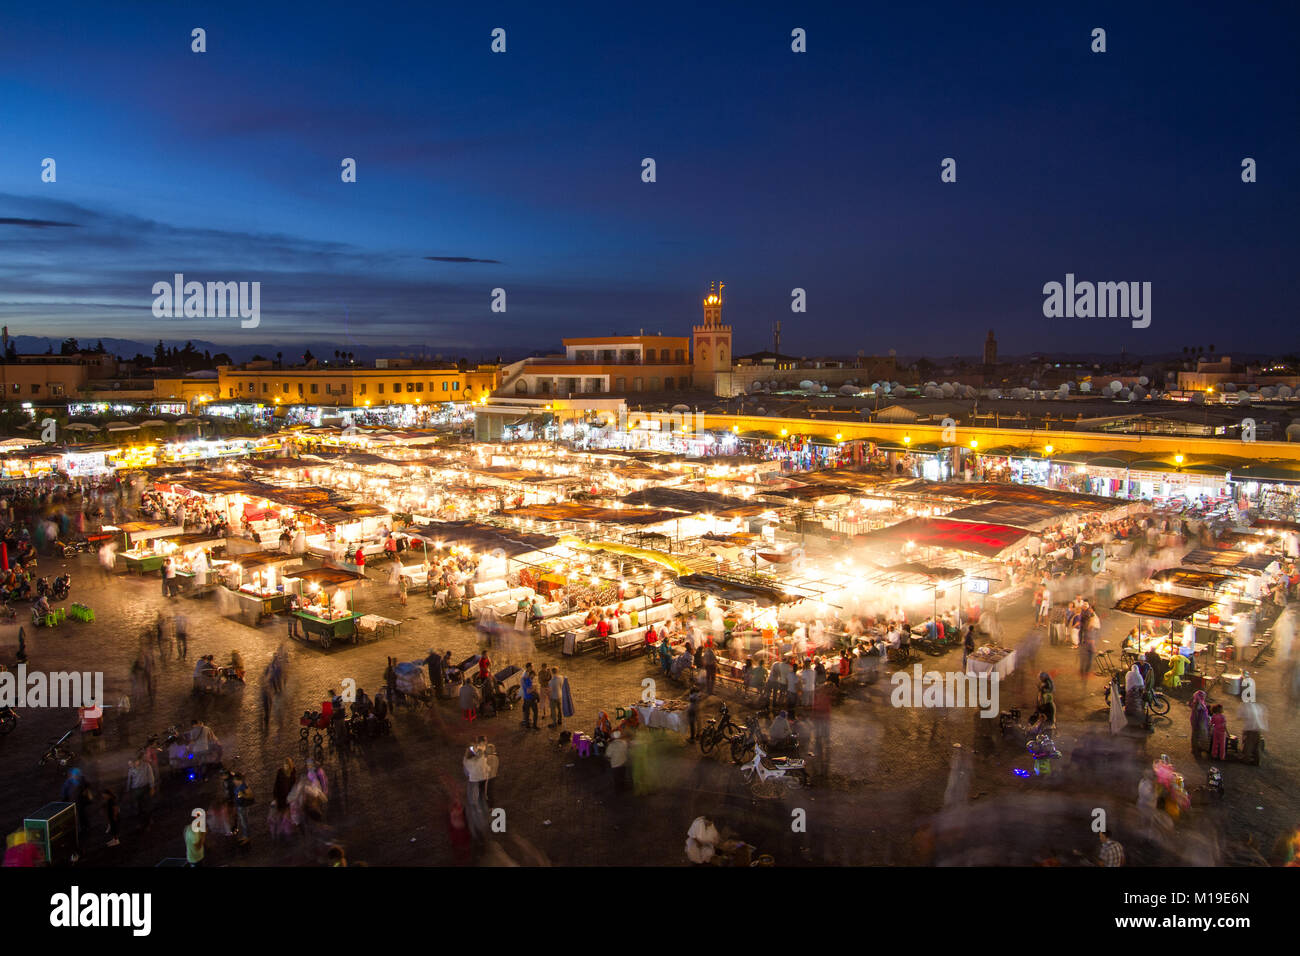 Jamaa el Fna market square at dusk, Marrakesh, Morocco, north Africa. Jemaa el-Fnaa, Djema el-Fna or Djemaa el-Fnaa is a famous square and market plac Stock Photo